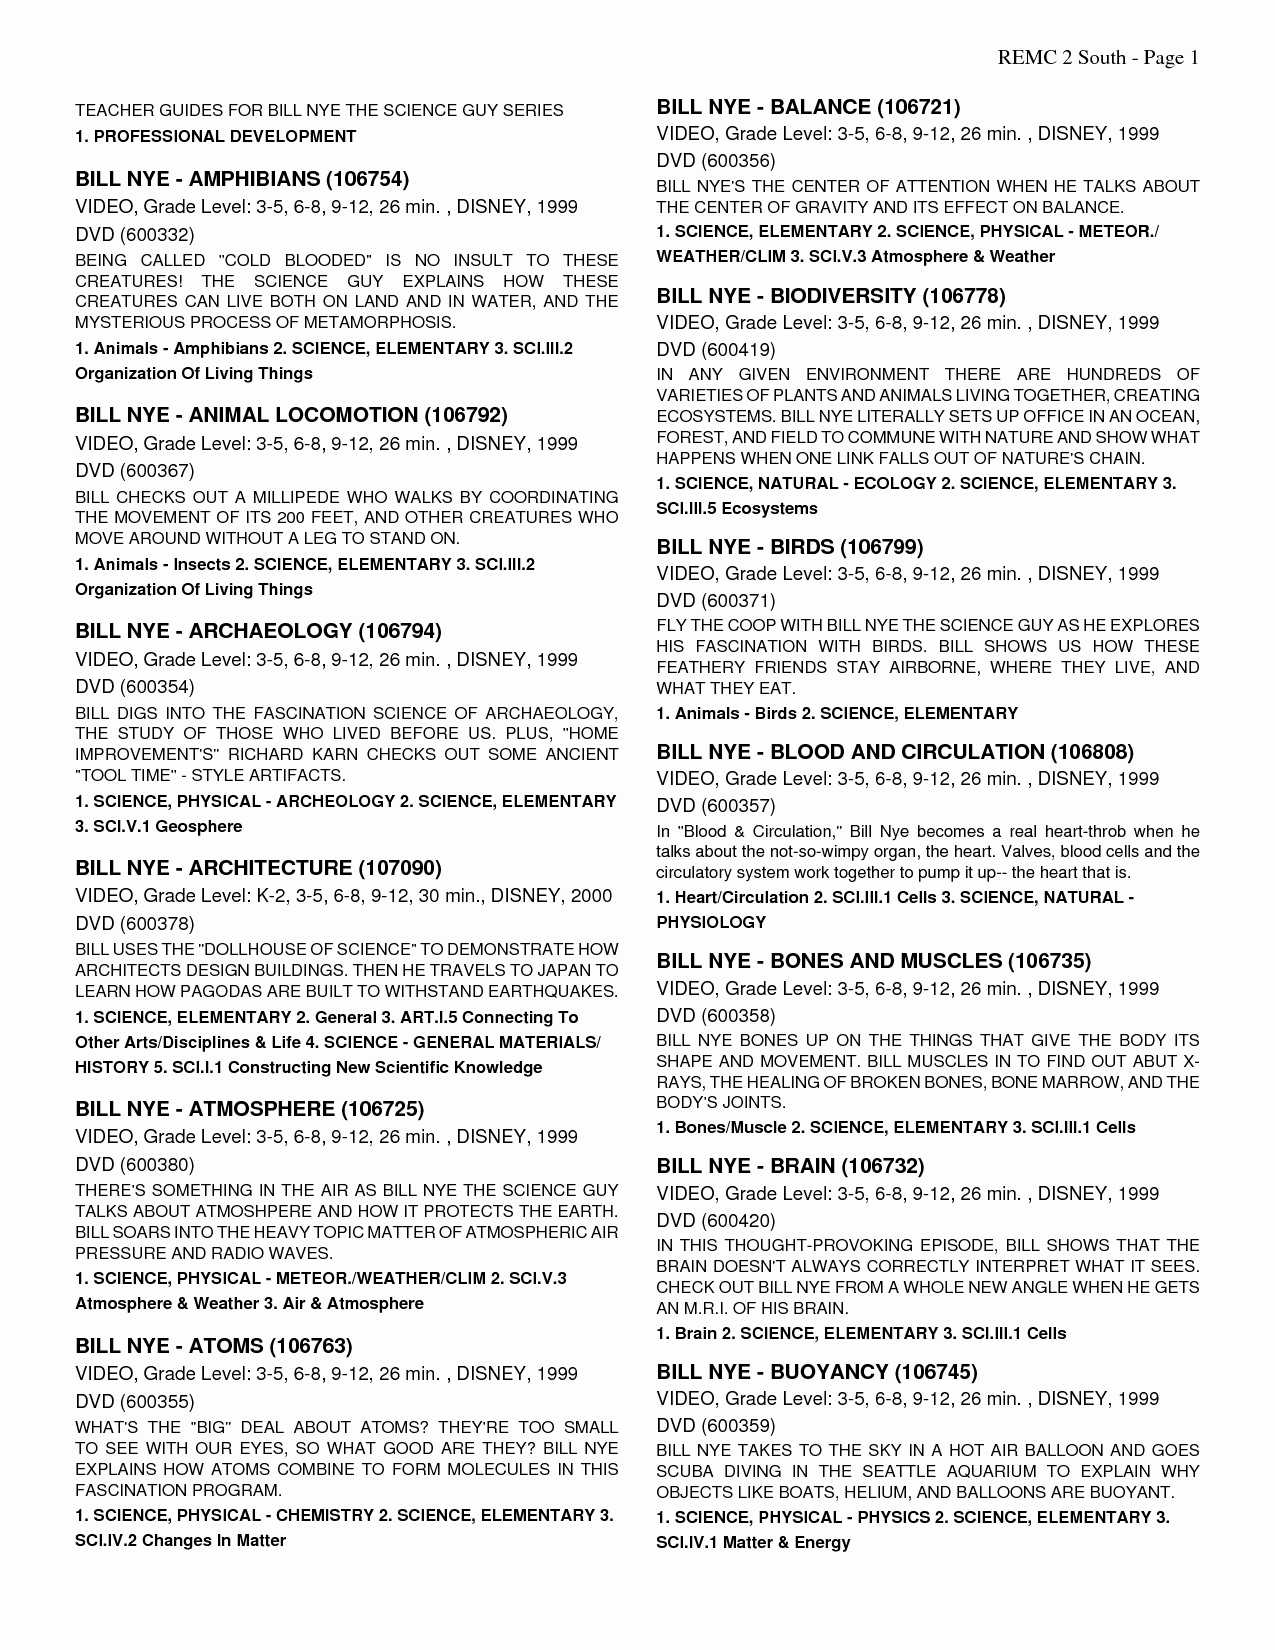 Human Heart Walk Thru Worksheet Answers with Bill Nye Heat Worksheet Choice Image Worksheet for Kids In English